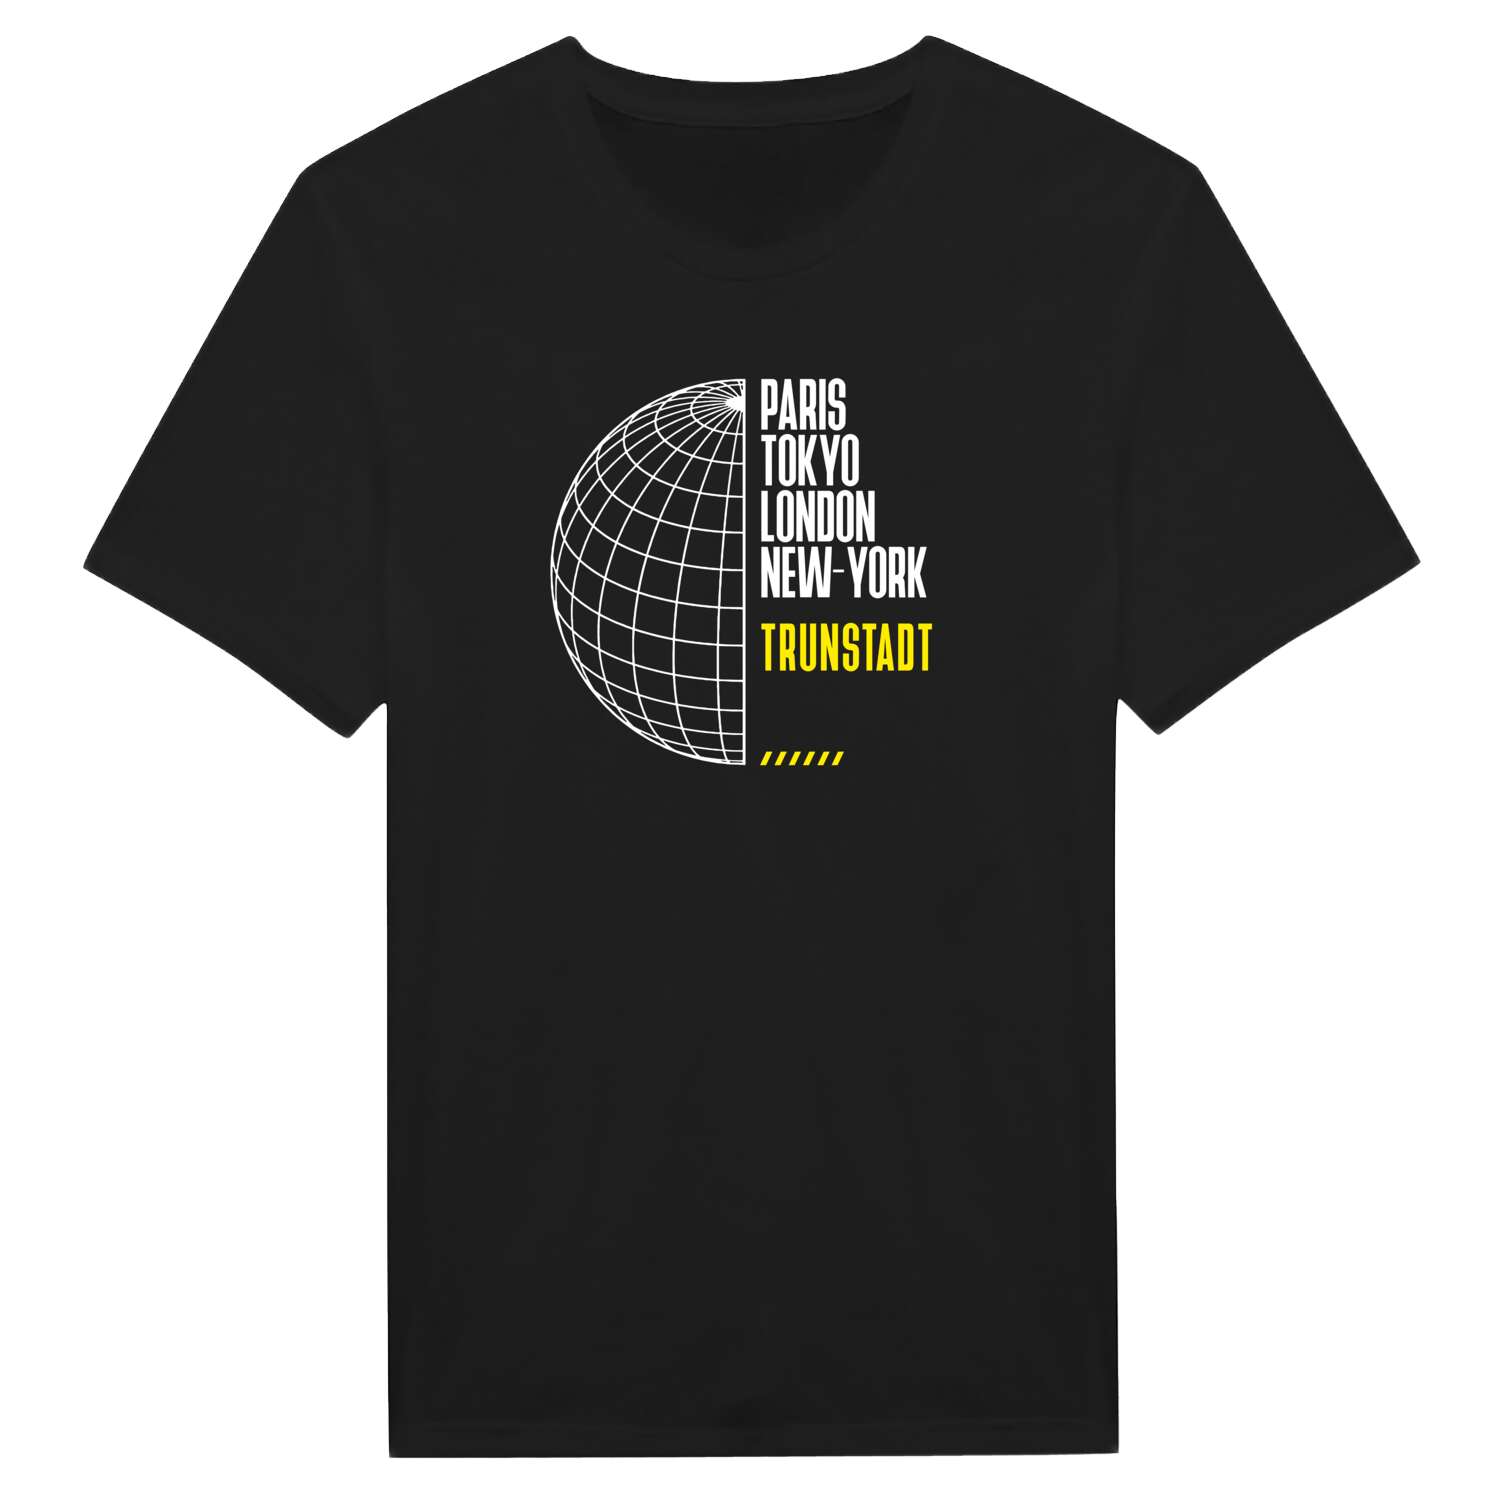 Trunstadt T-Shirt »Paris Tokyo London«